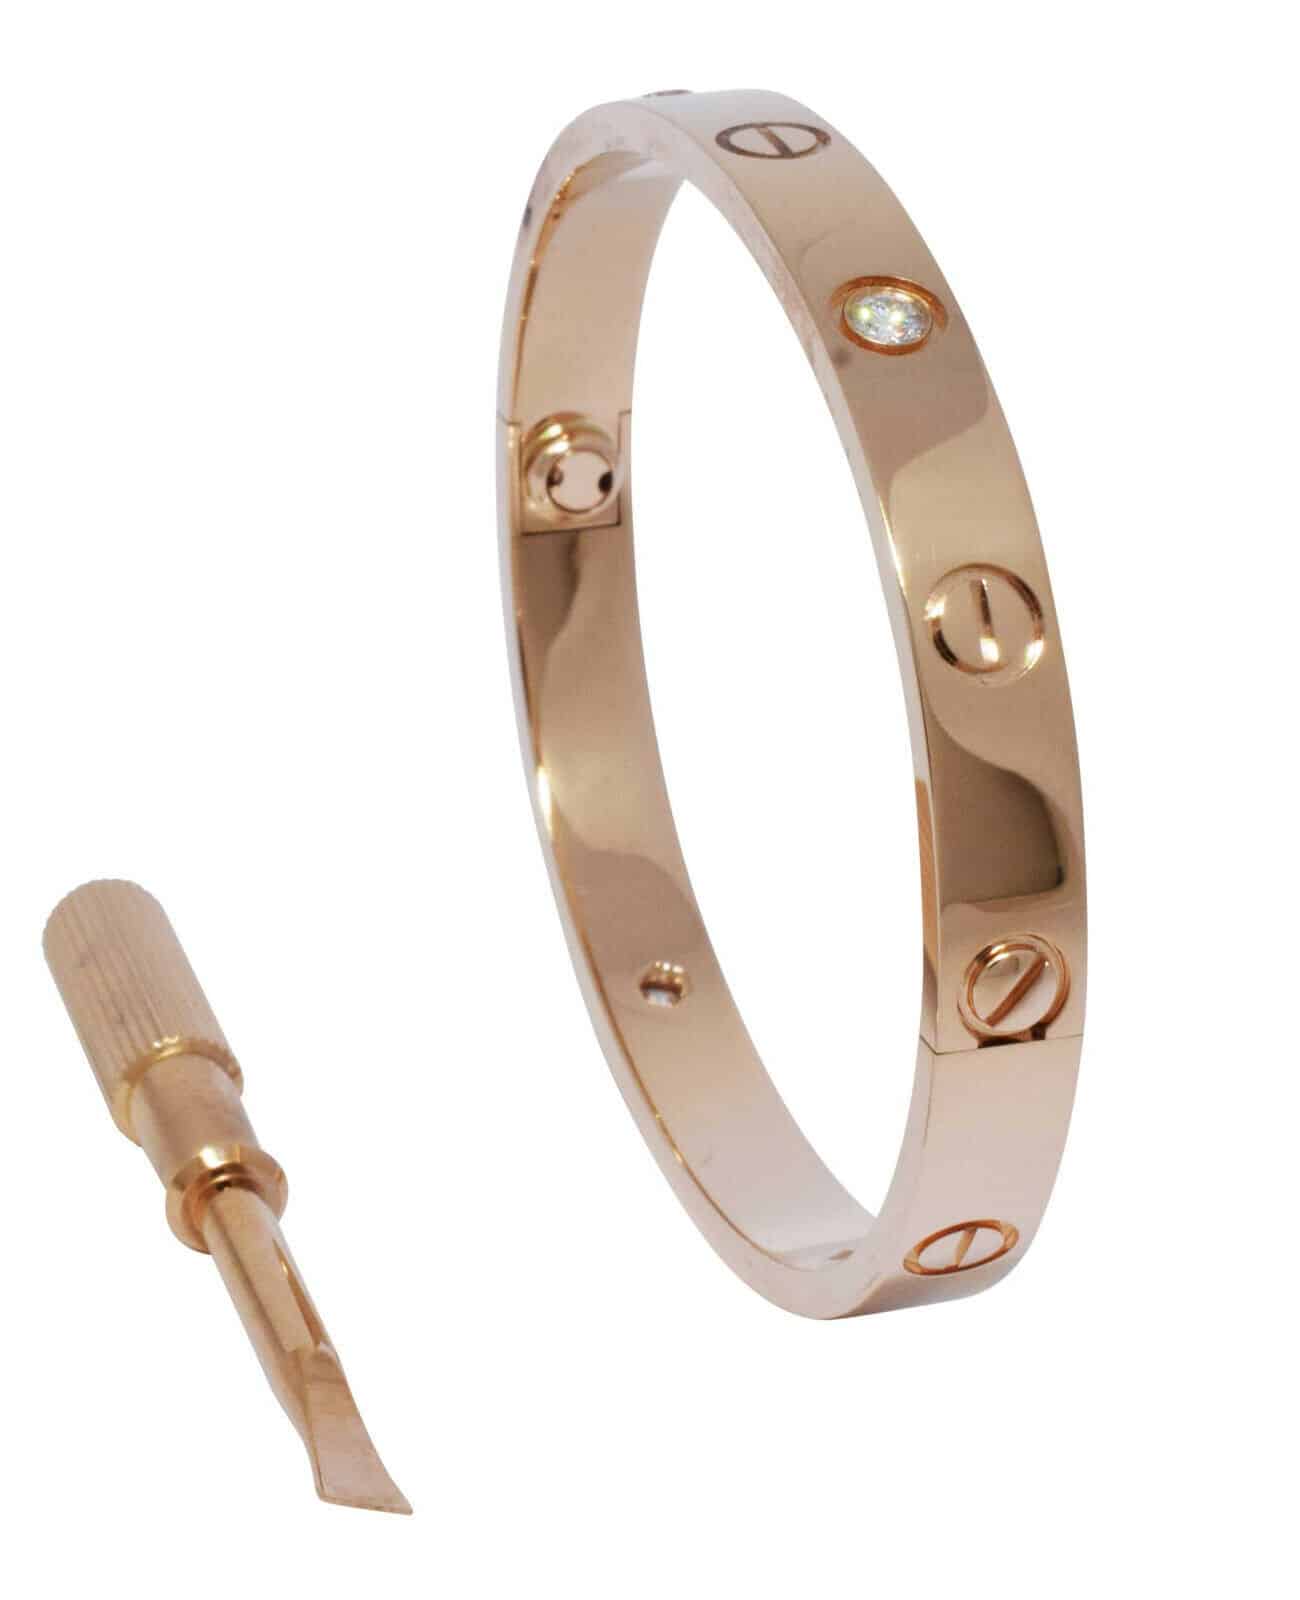 Name Bracelet / Anklet with Capital Letters in 18K Rose Gold Plating - MYKA